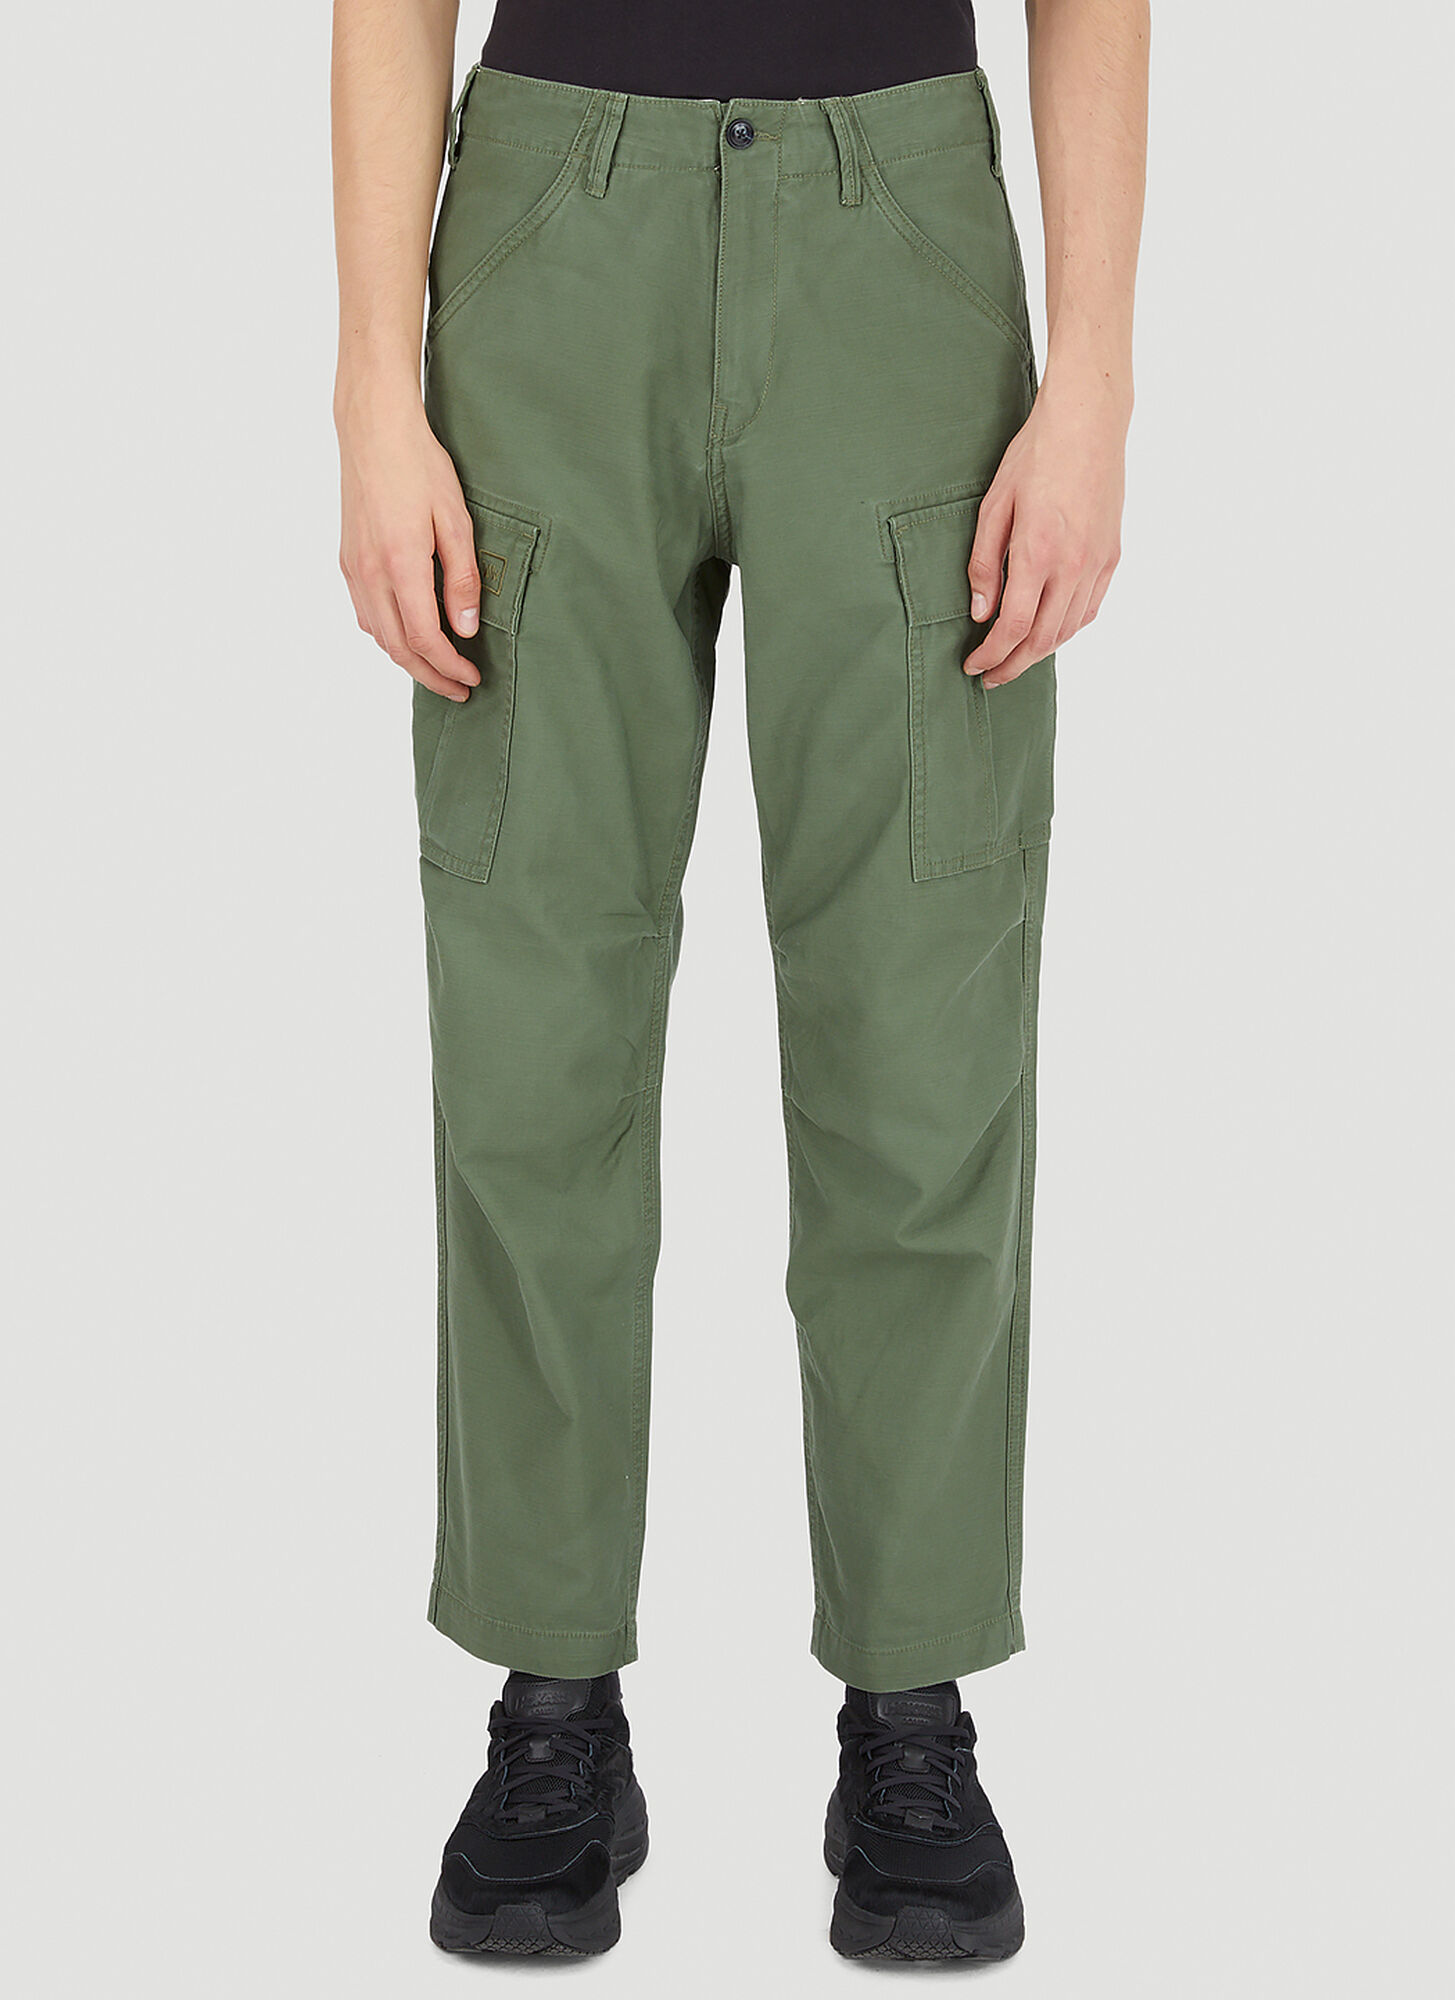 Liberaiders Six Pocket Army Pants Male Green